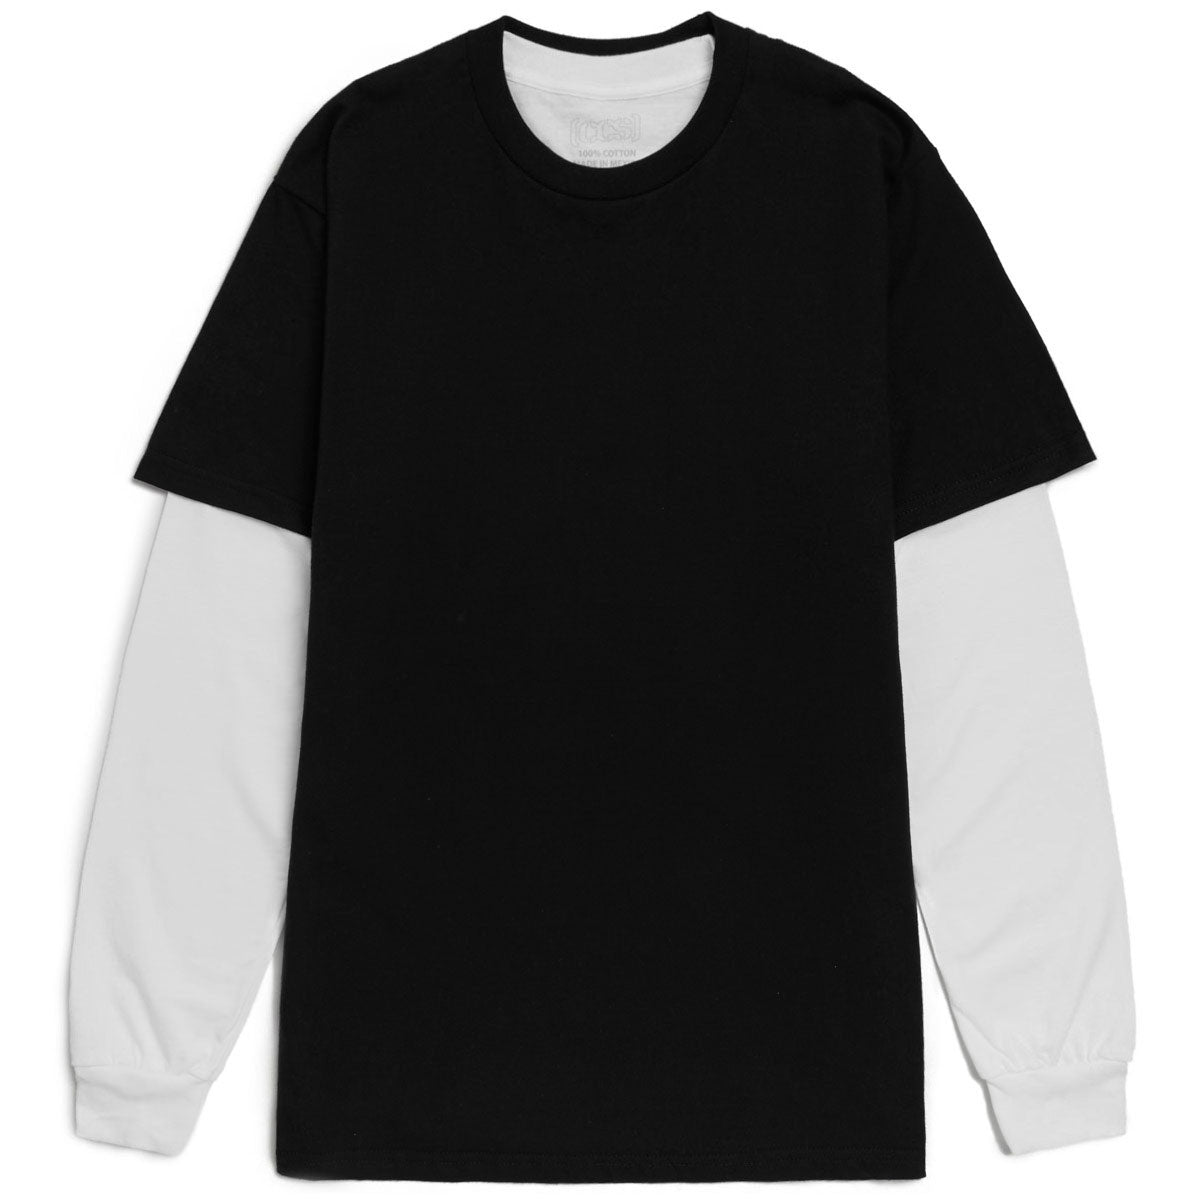 CCS OG Combo Pack T-Shirts - Black/White image 1